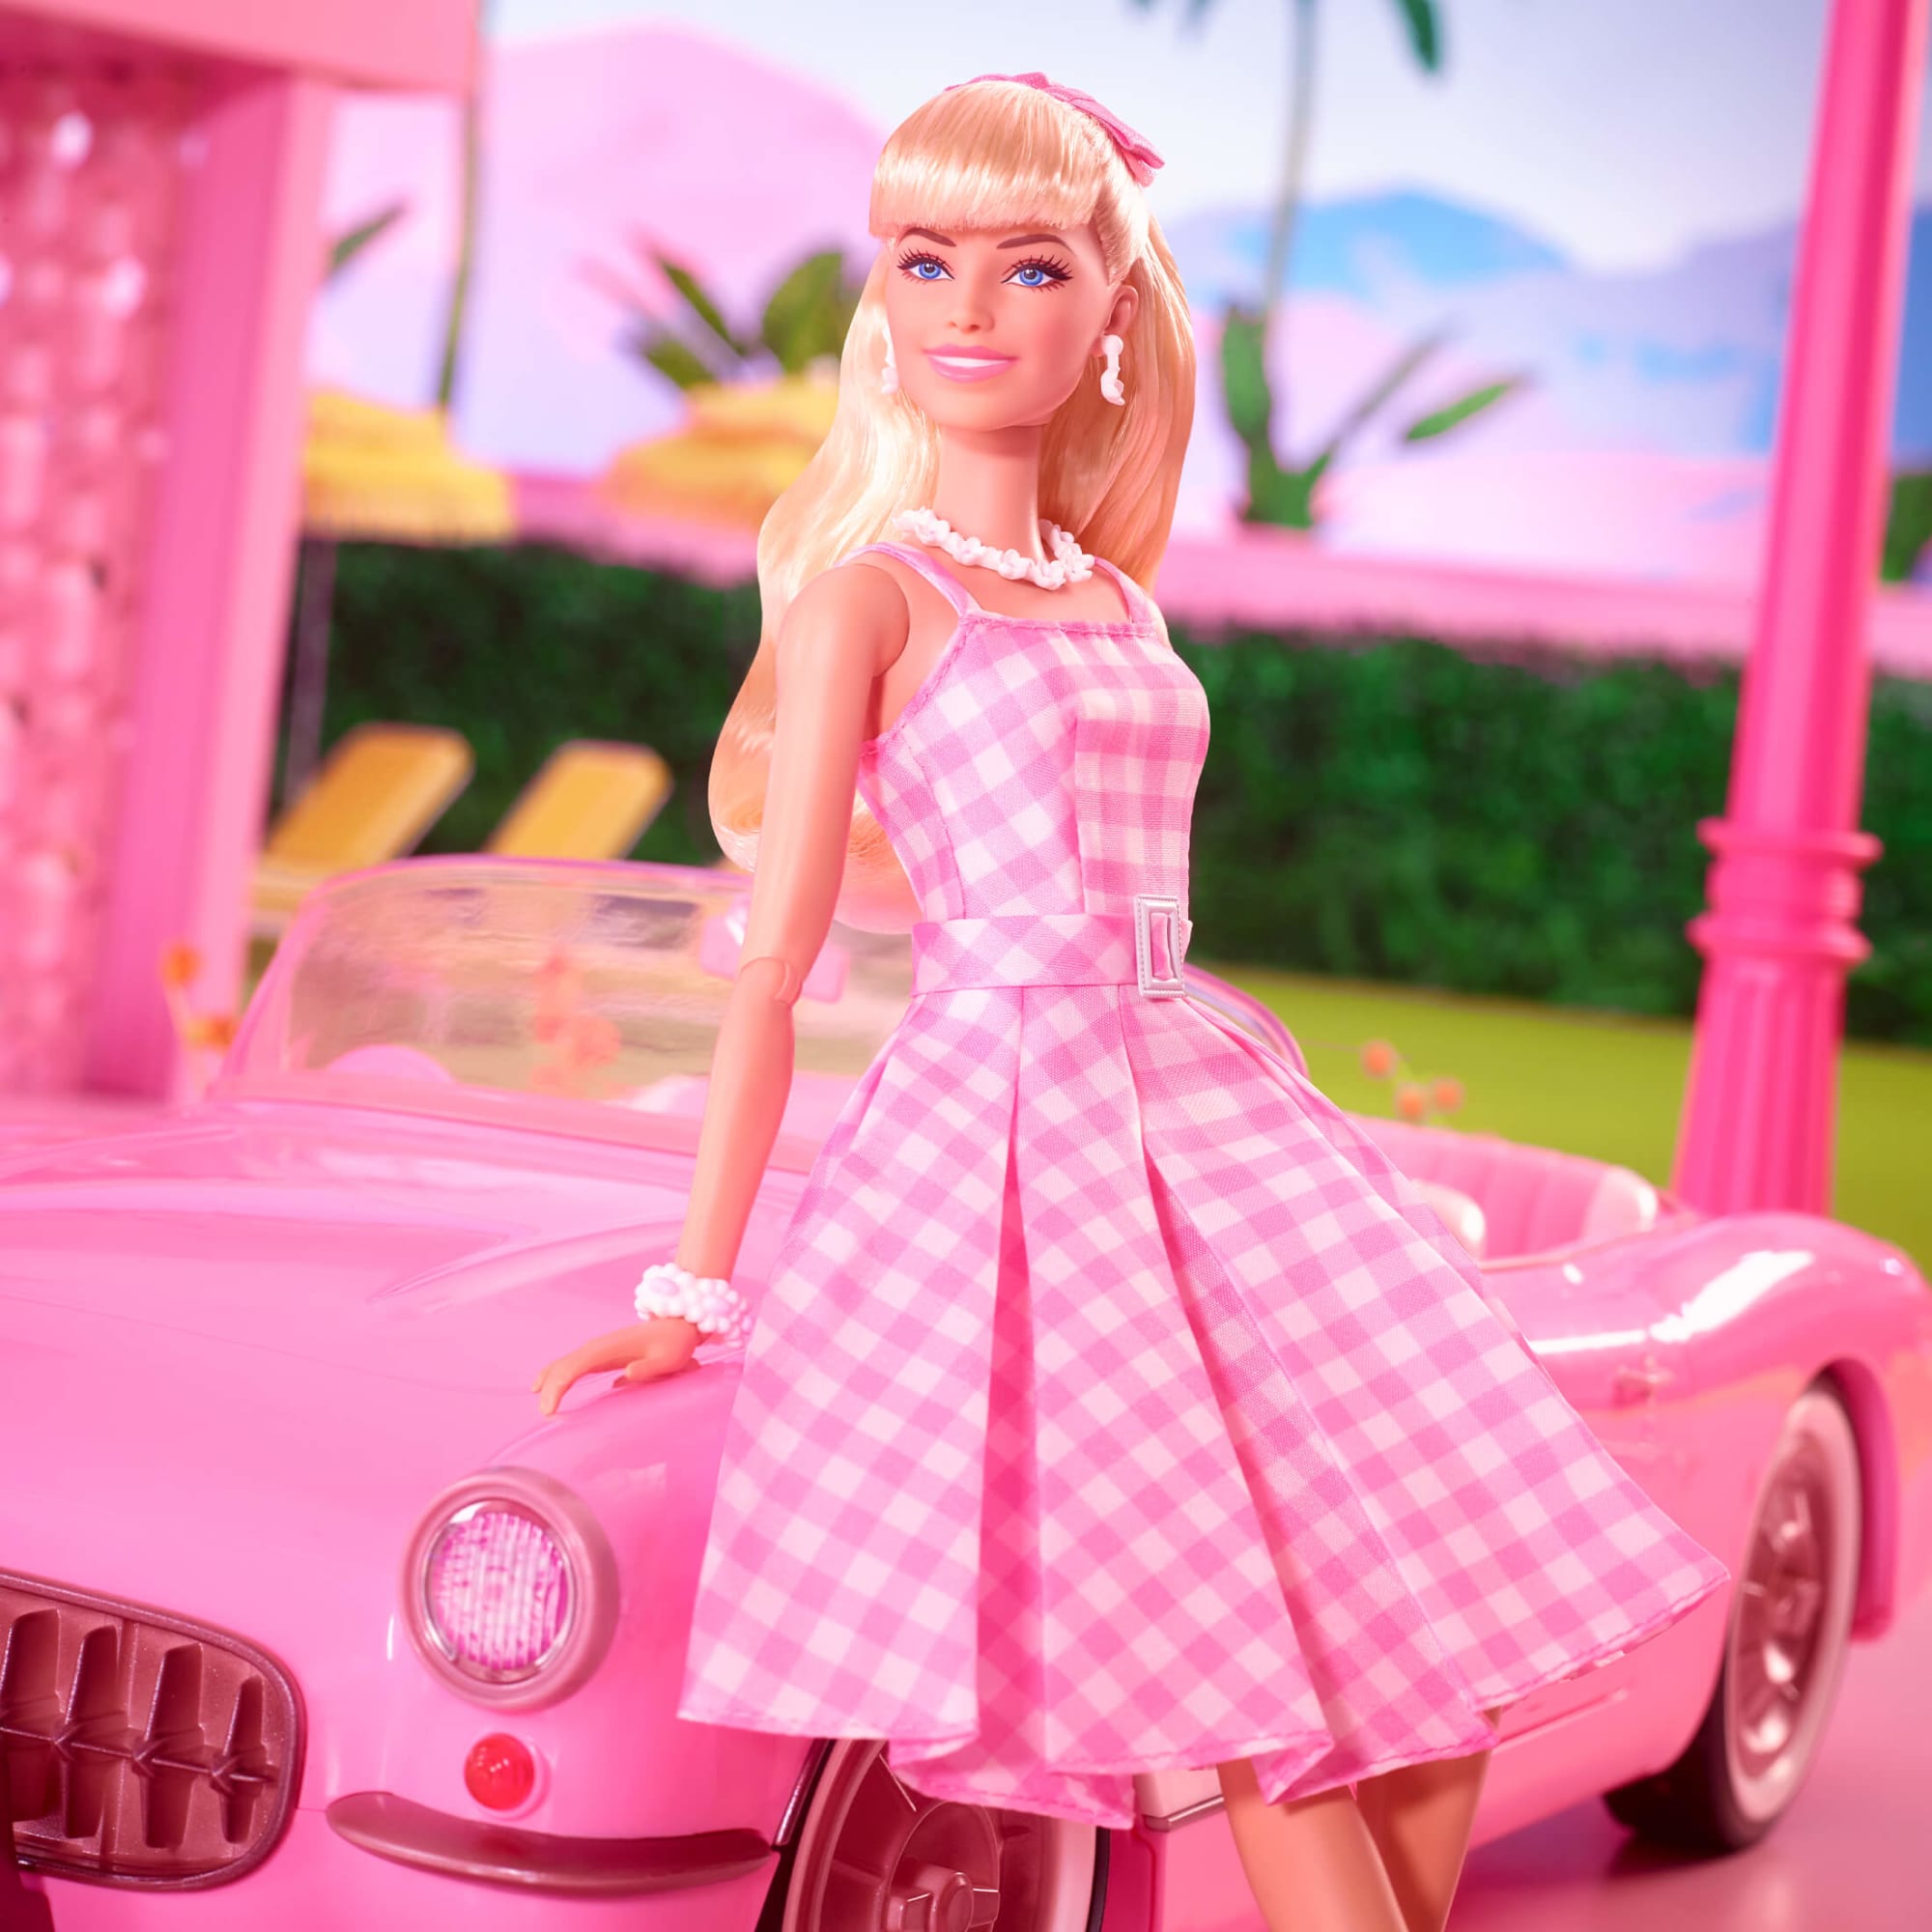 barbie in pink dress